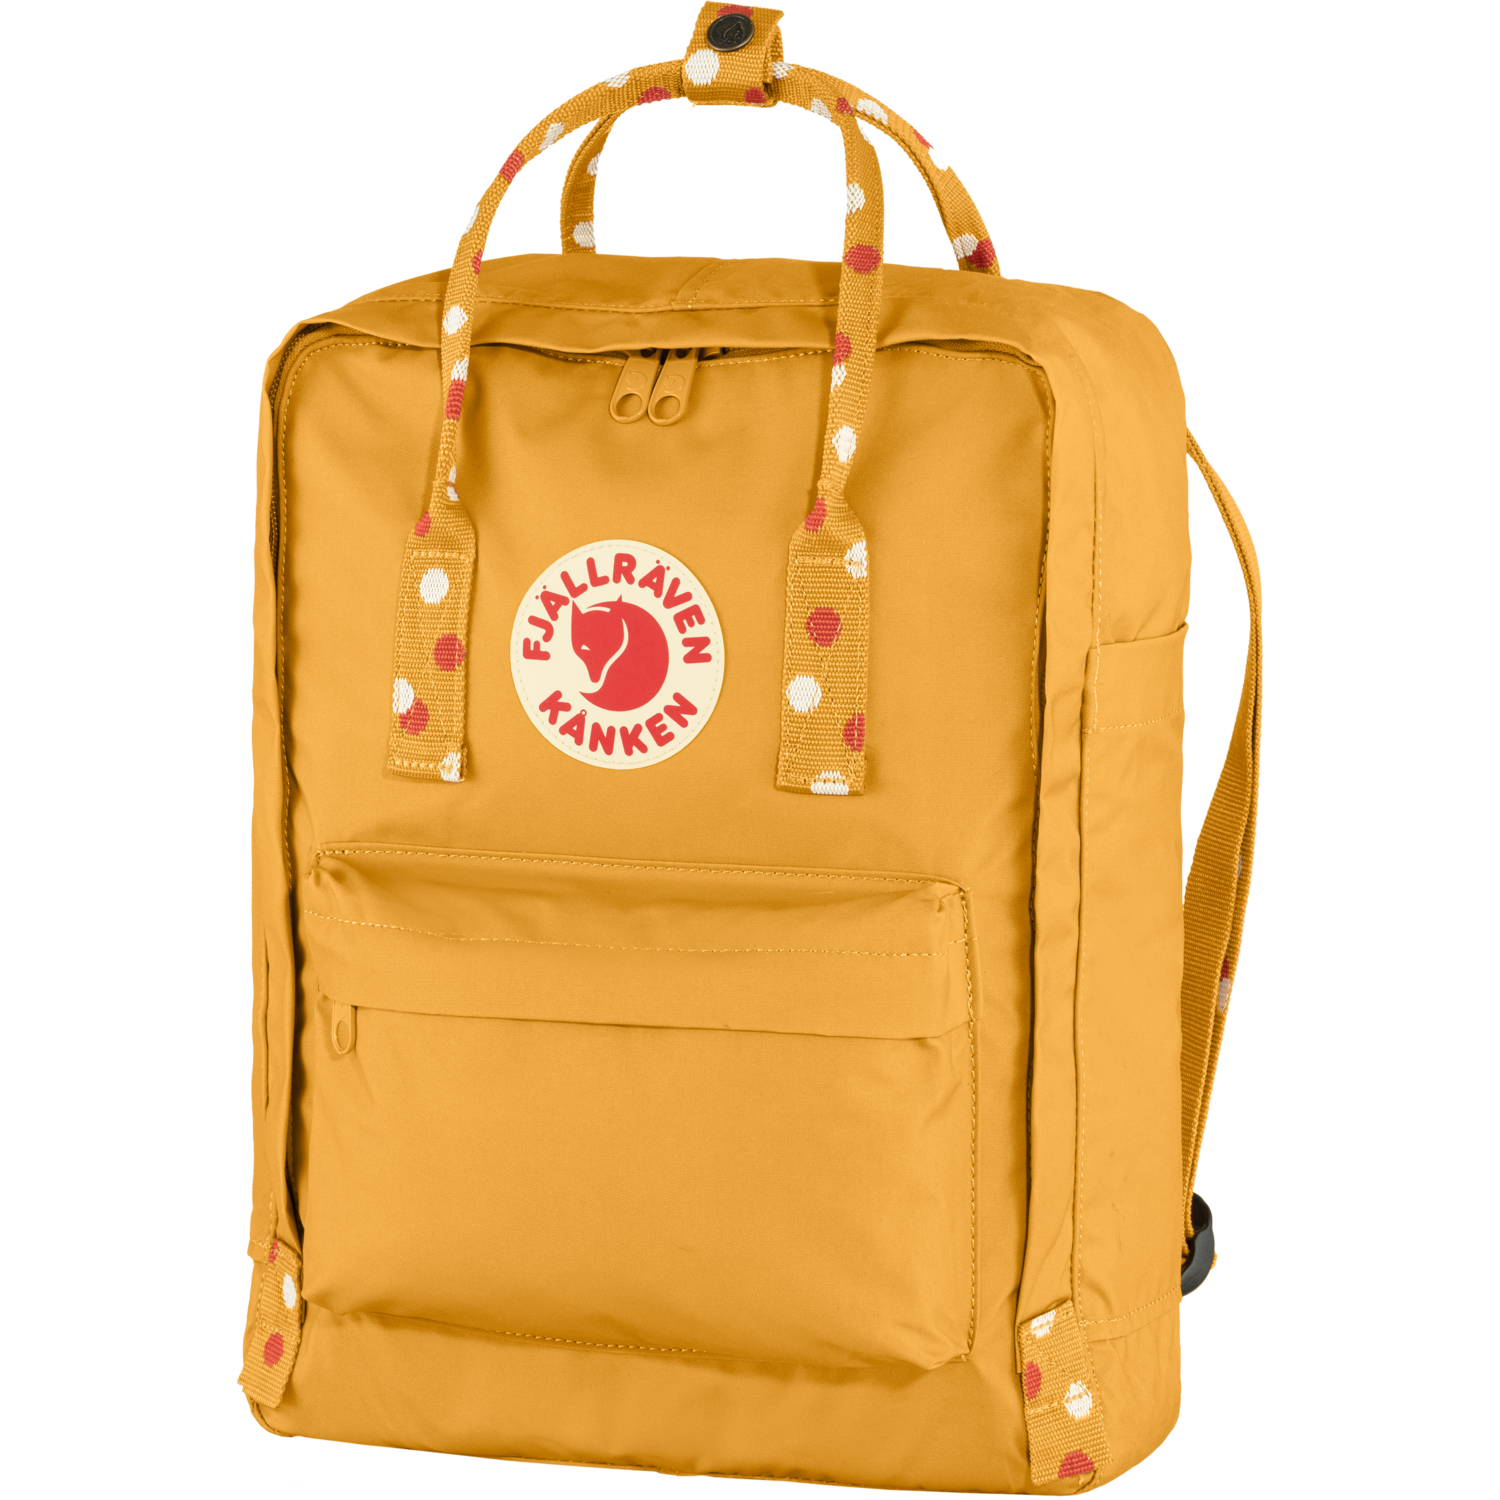 kanken school backpacks for students